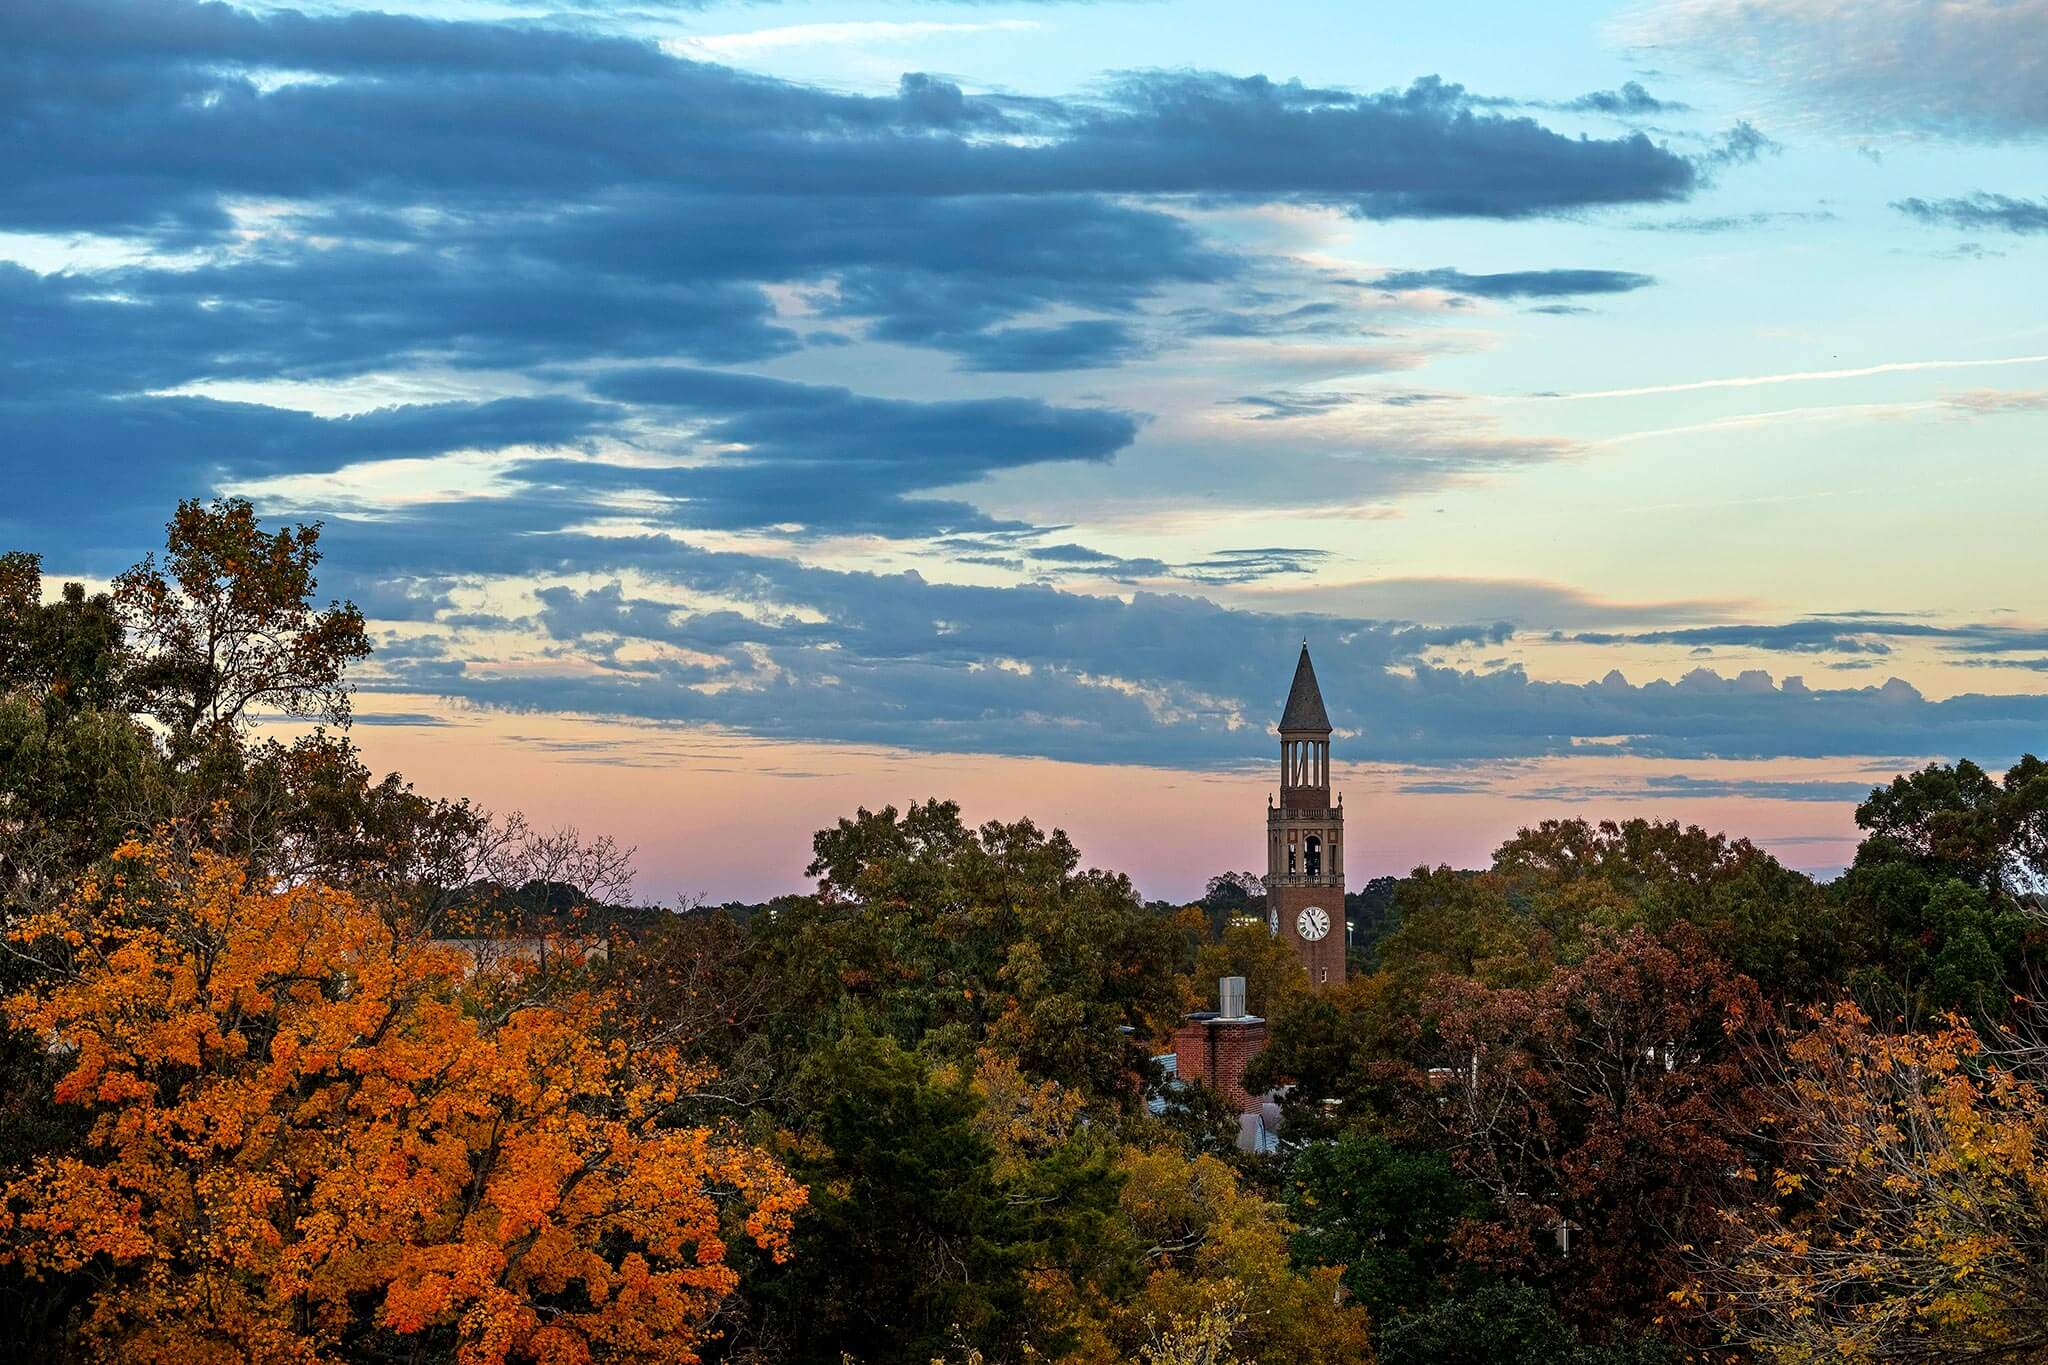 The Graduate School of the University of North Carolina at Chapel Hill